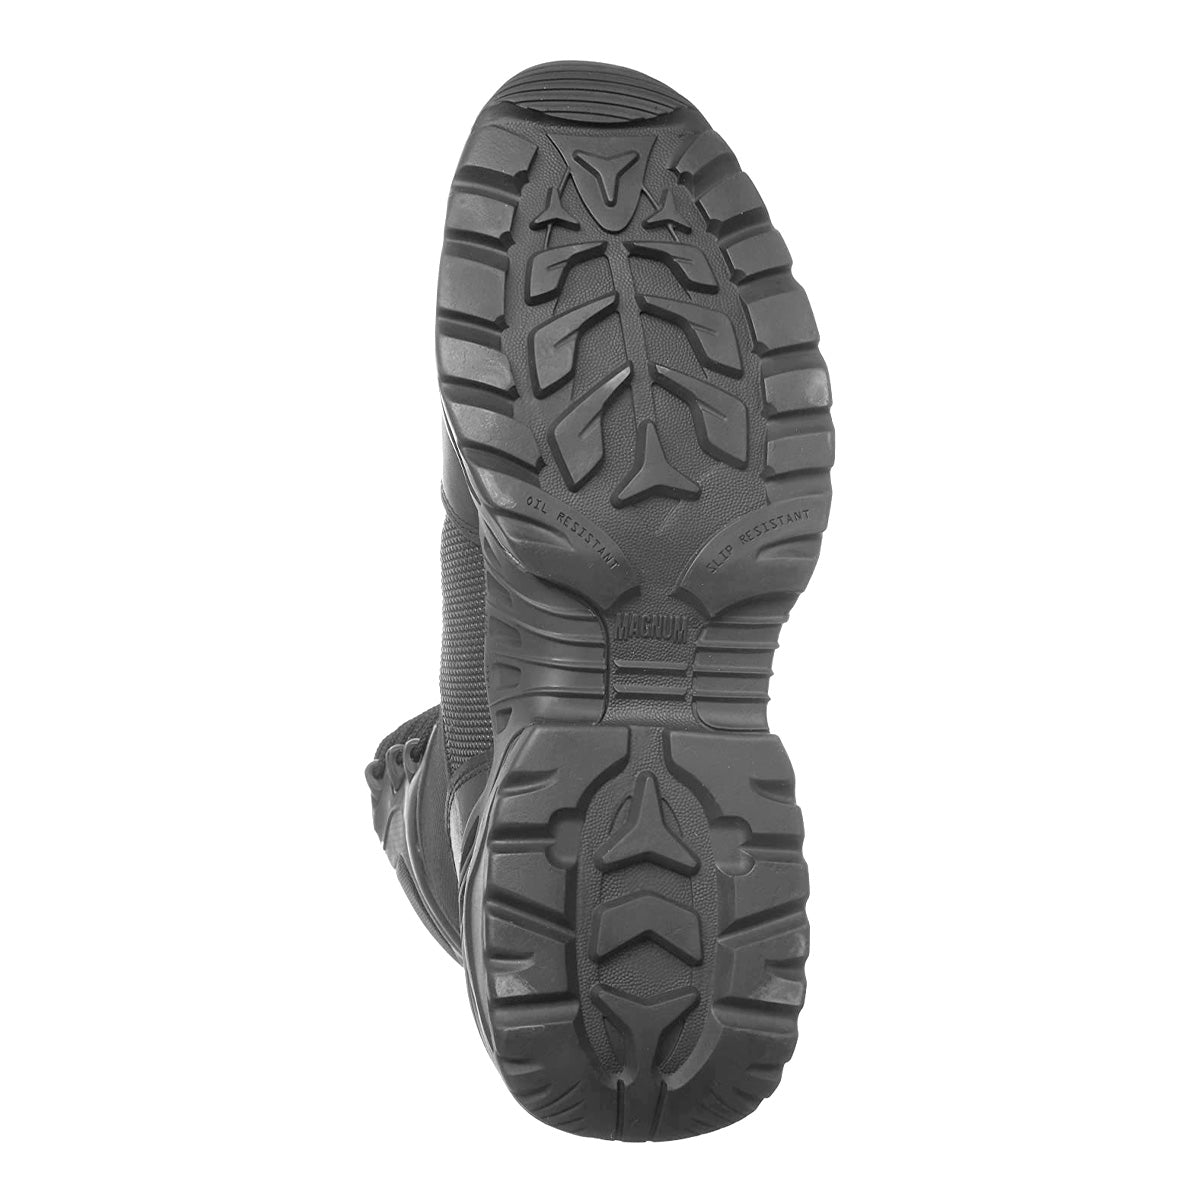 Magnum Elite Spider 8.1 Urban Side-Zip Boot Black Footwear Magnum Footwear Tactical Gear Supplier Tactical Distributors Australia